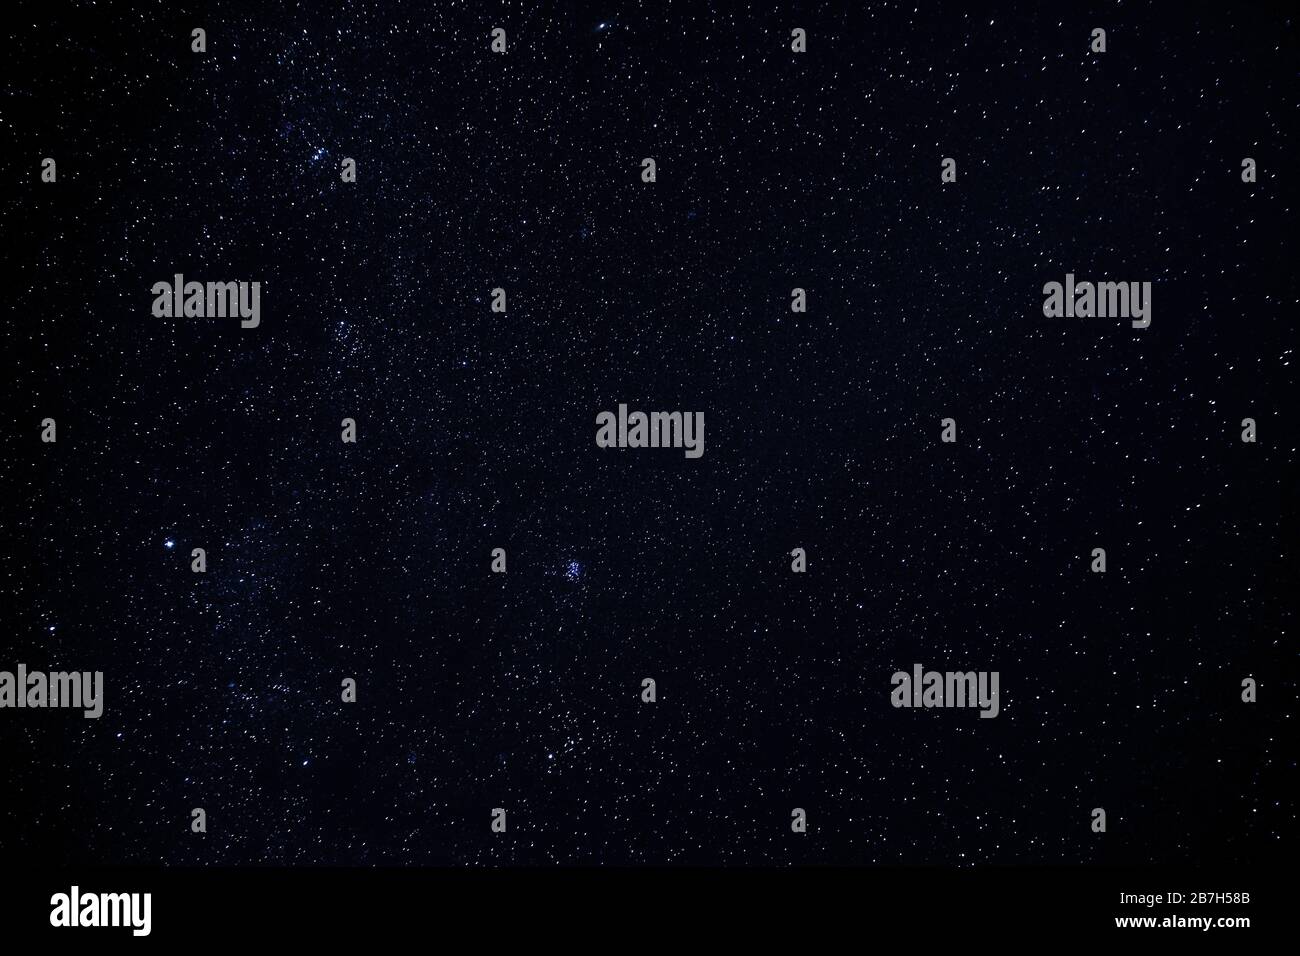 Long exposure clear night sky with shiny stars. Stock Photo